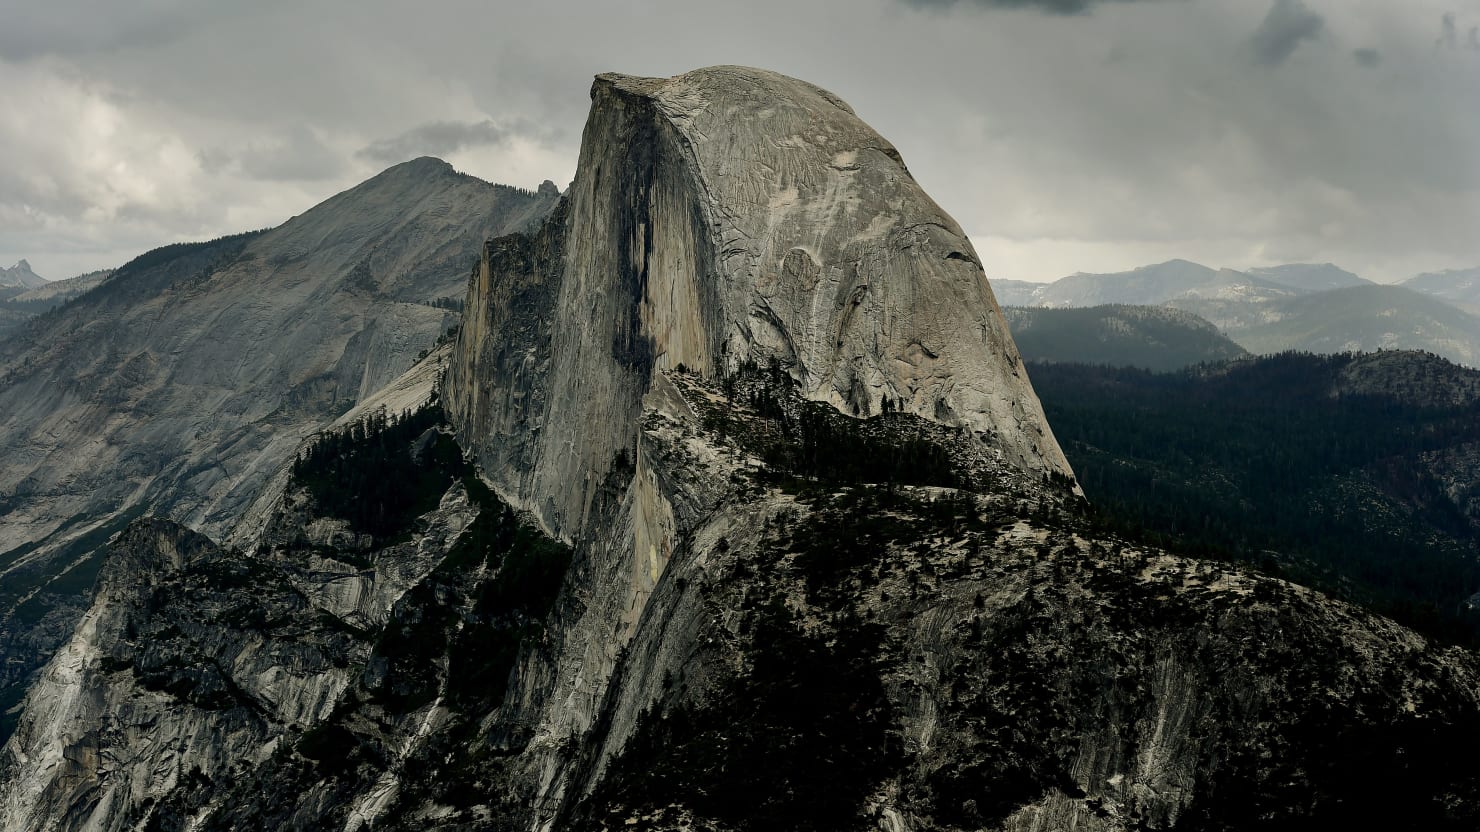 Arizona Woman Falls to Her Death While Climbing Half Dome in Yosemite